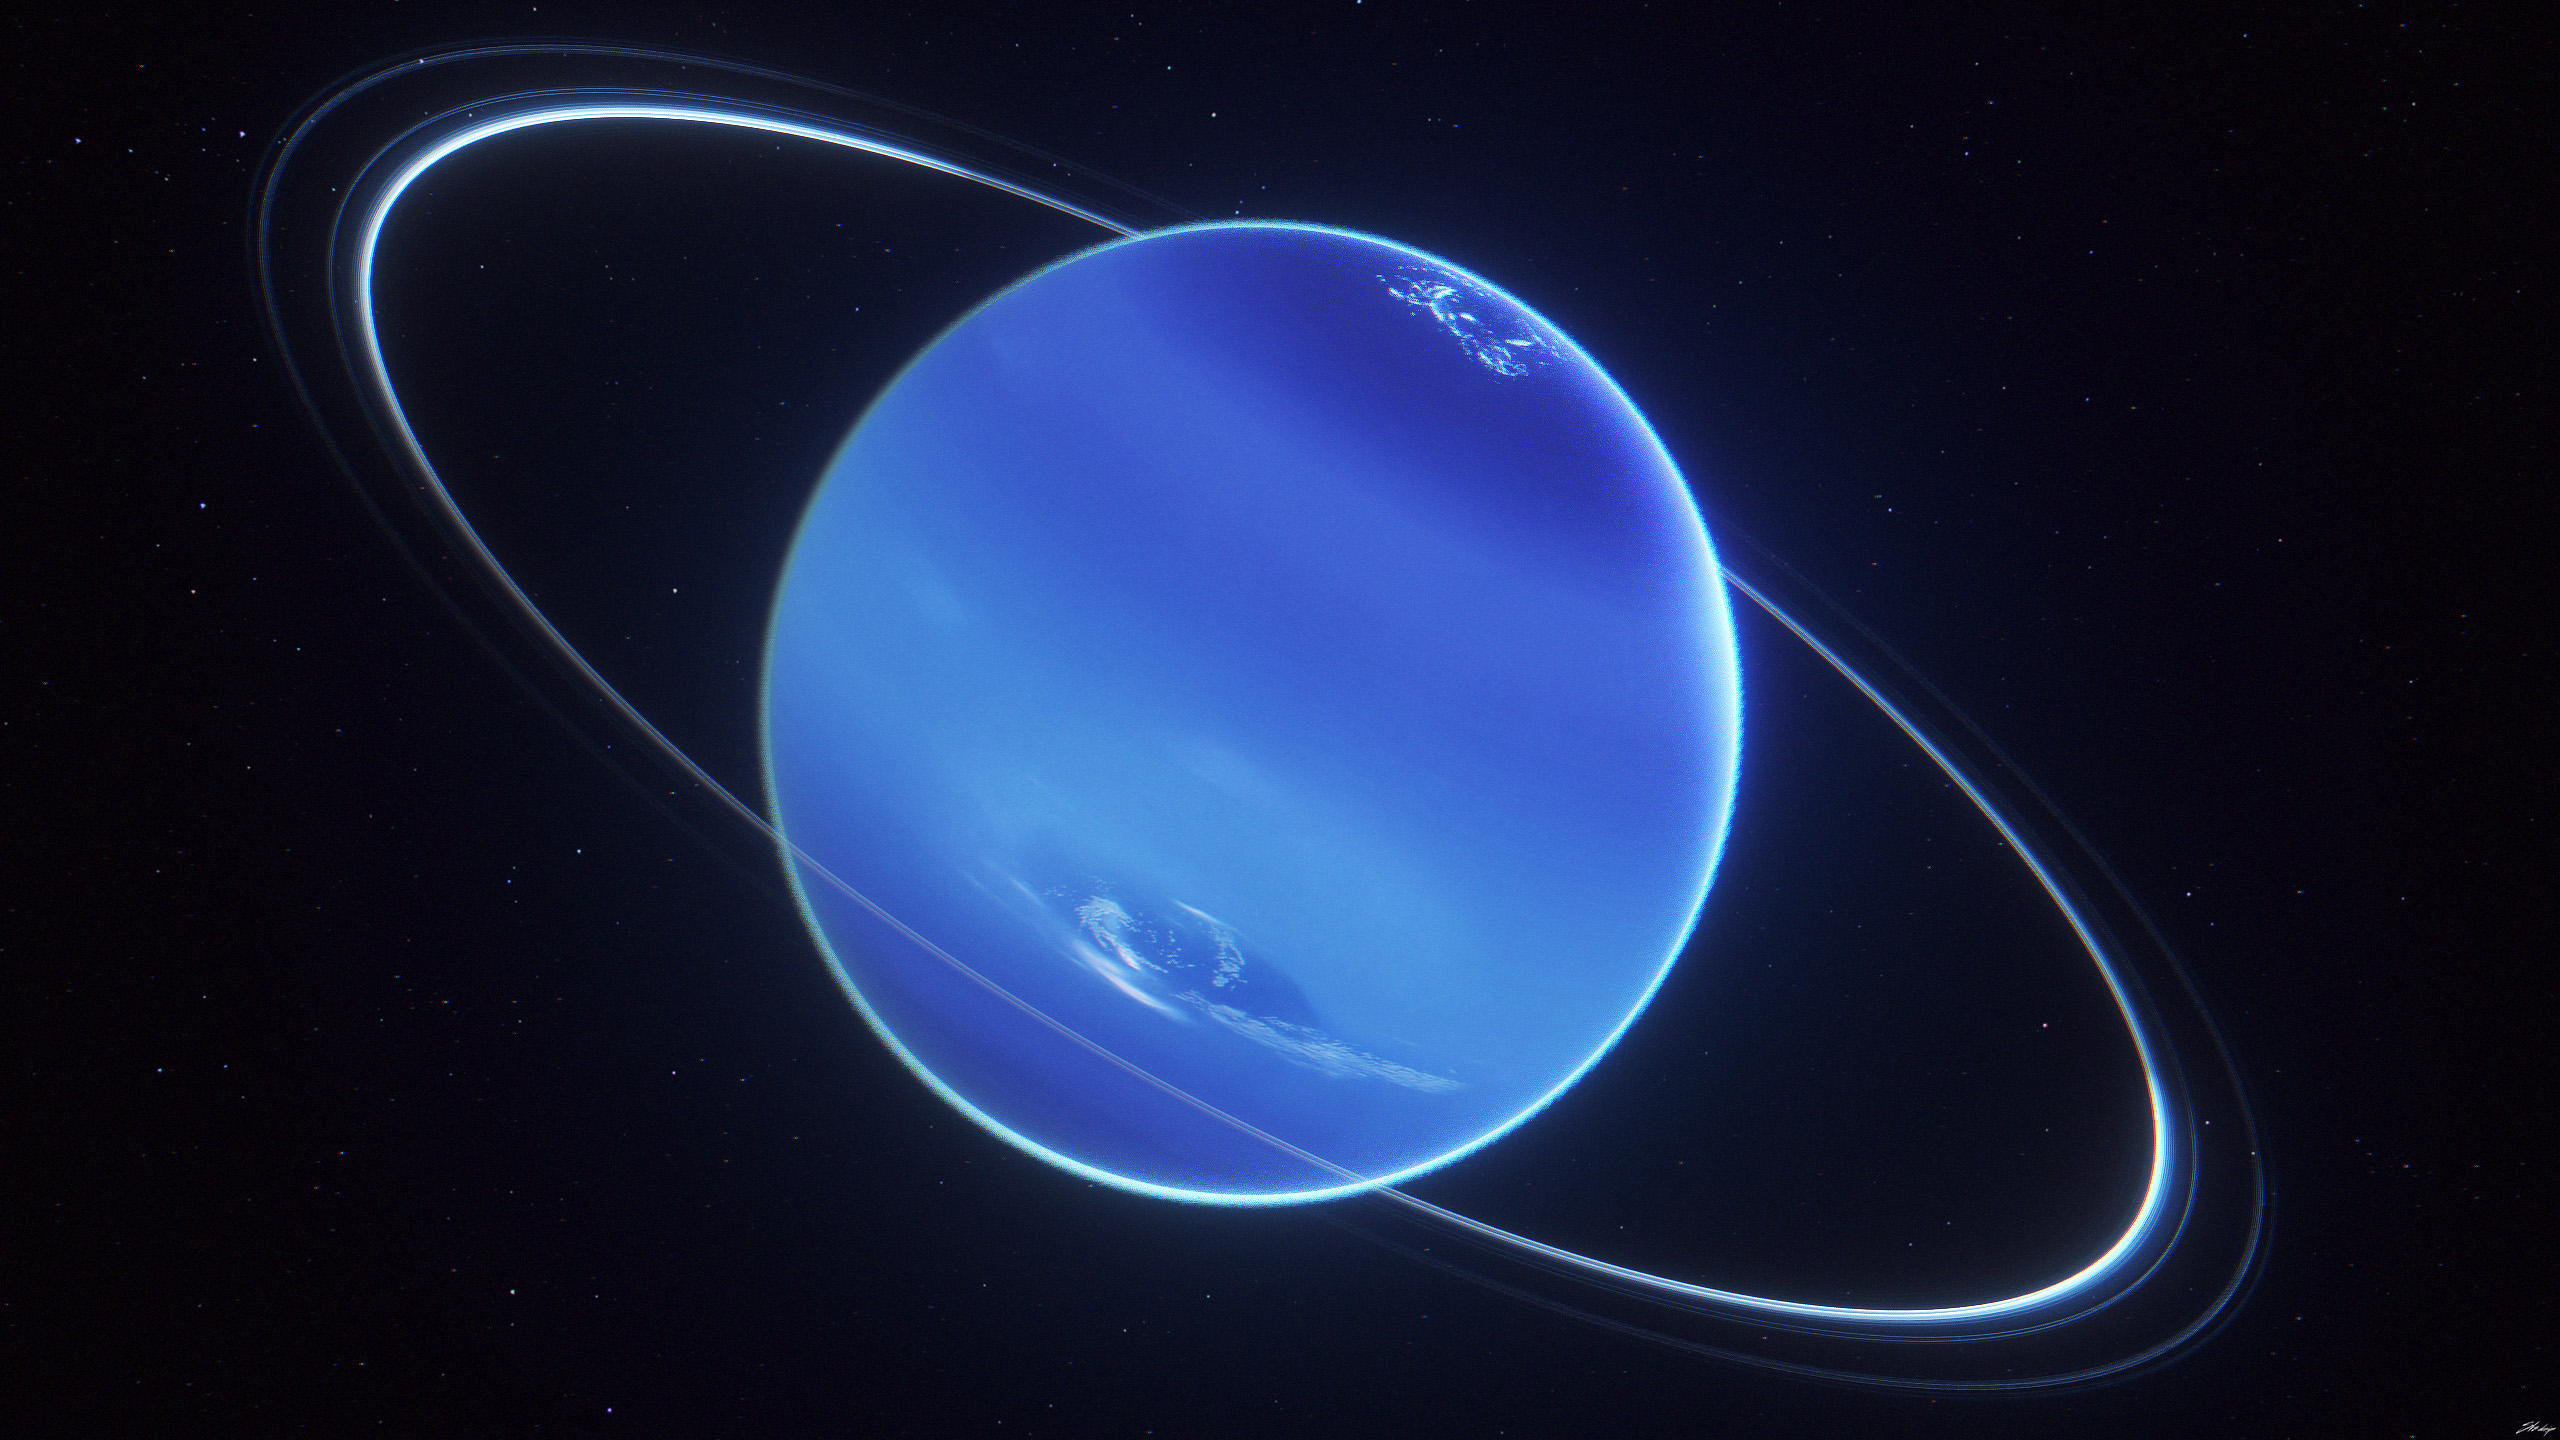 General 2560x1440 Neptune Solar System digital art space art astronomy black background planet sphere planetary rings